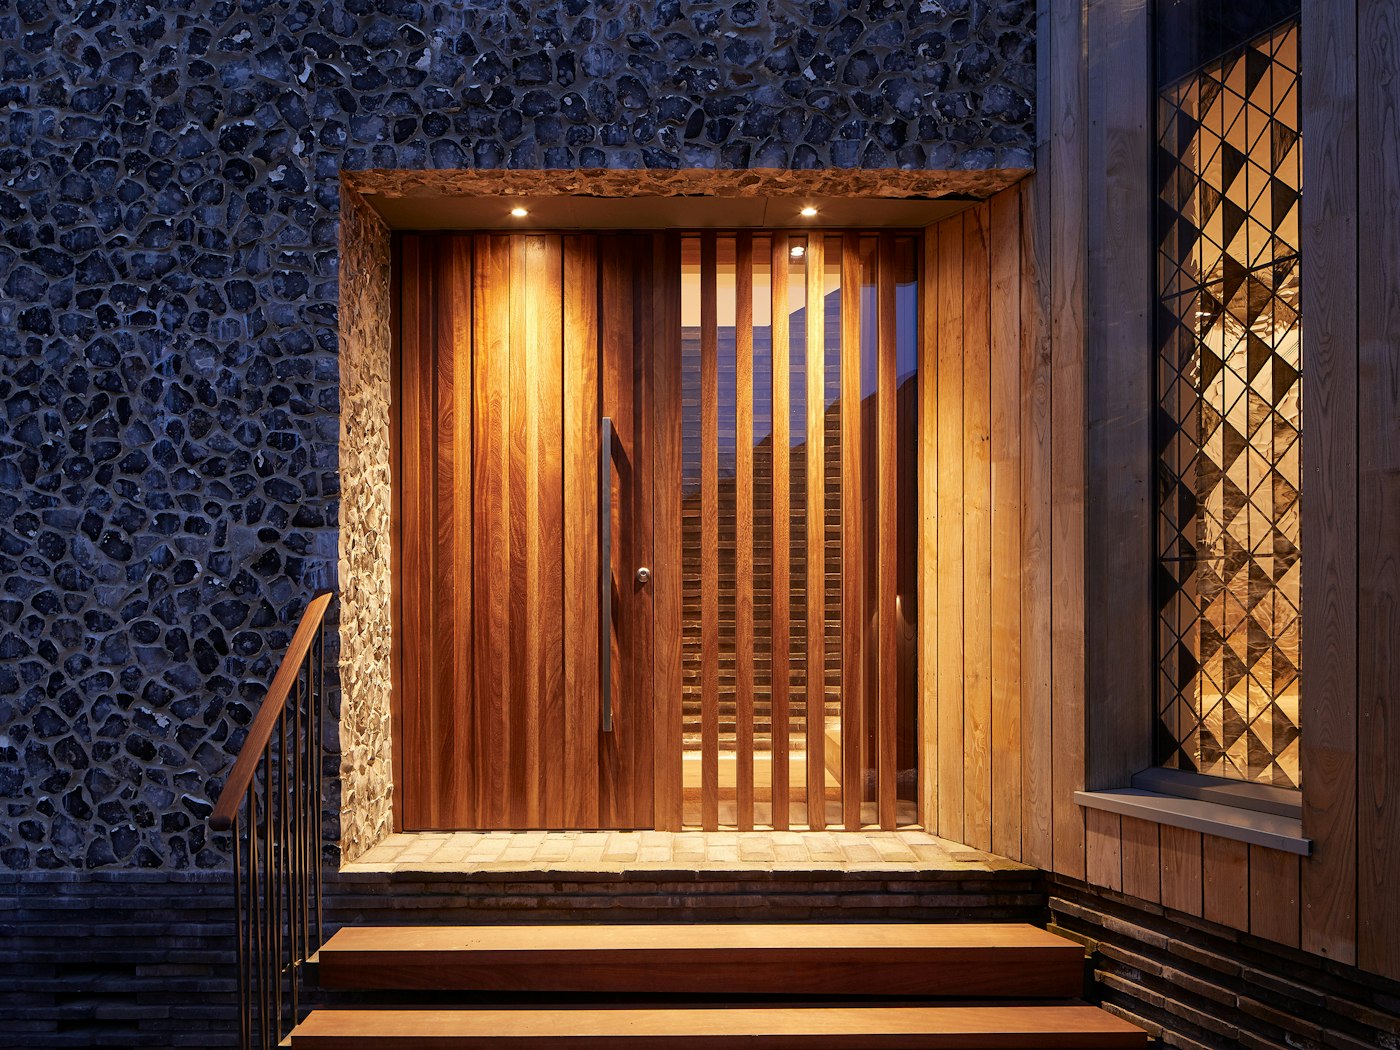 Bespoke Iroko hardwood door designed by the architects